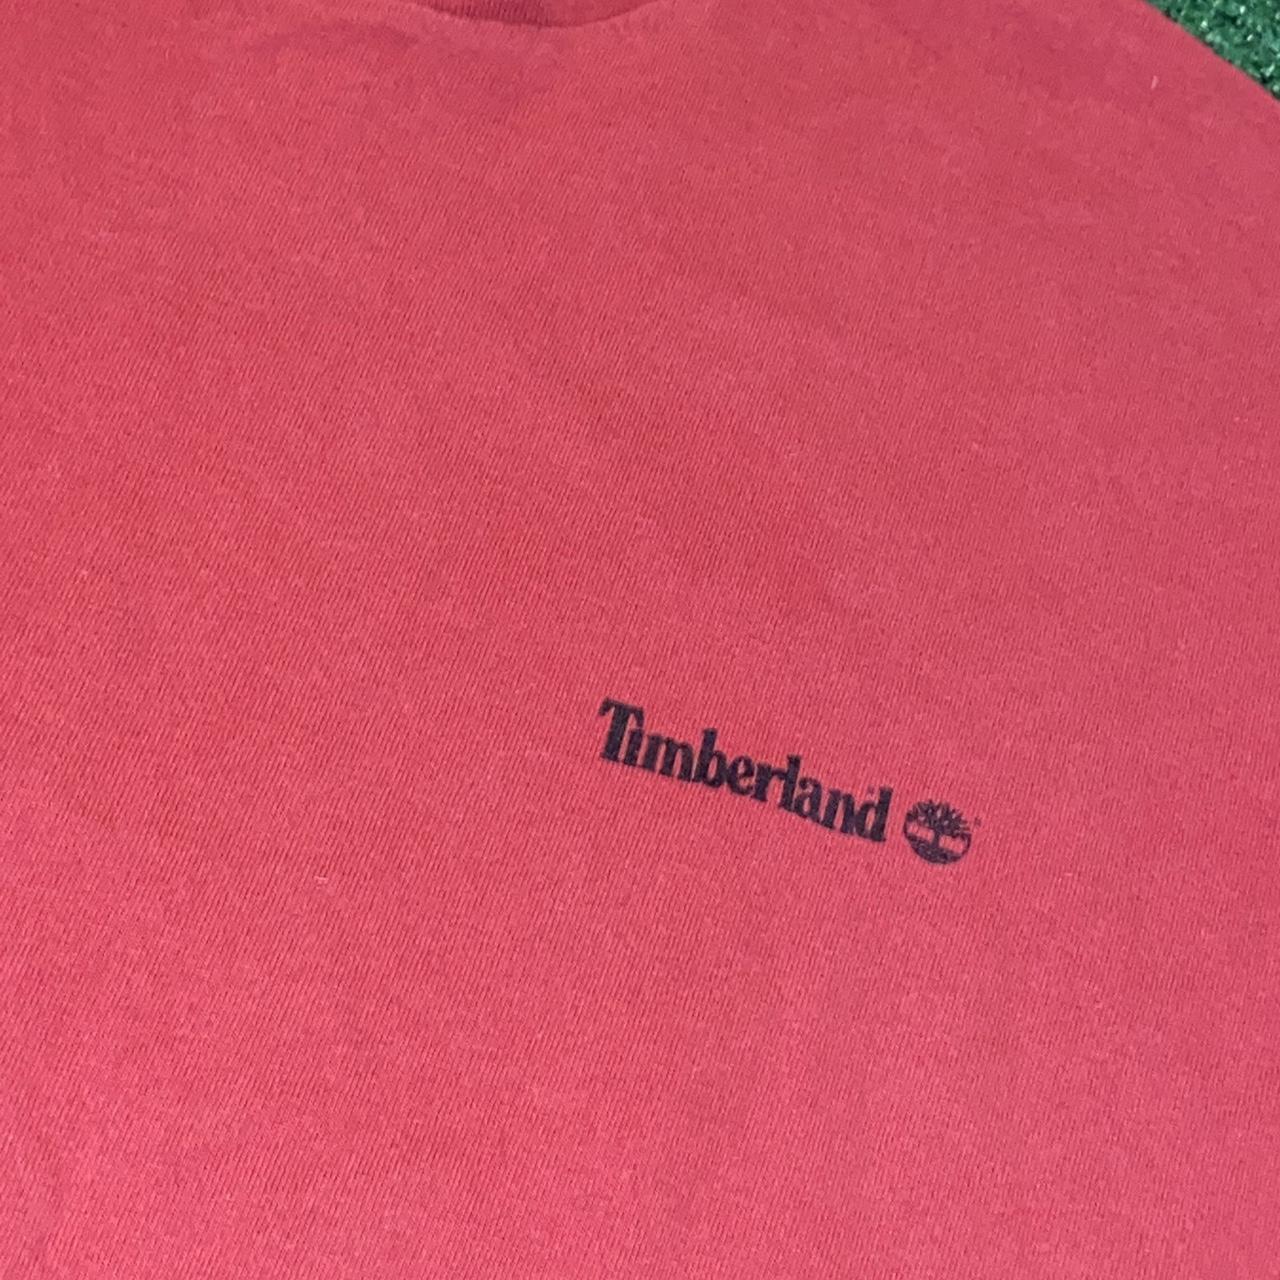 Timberland Men's Burgundy and Navy T-shirt (2)